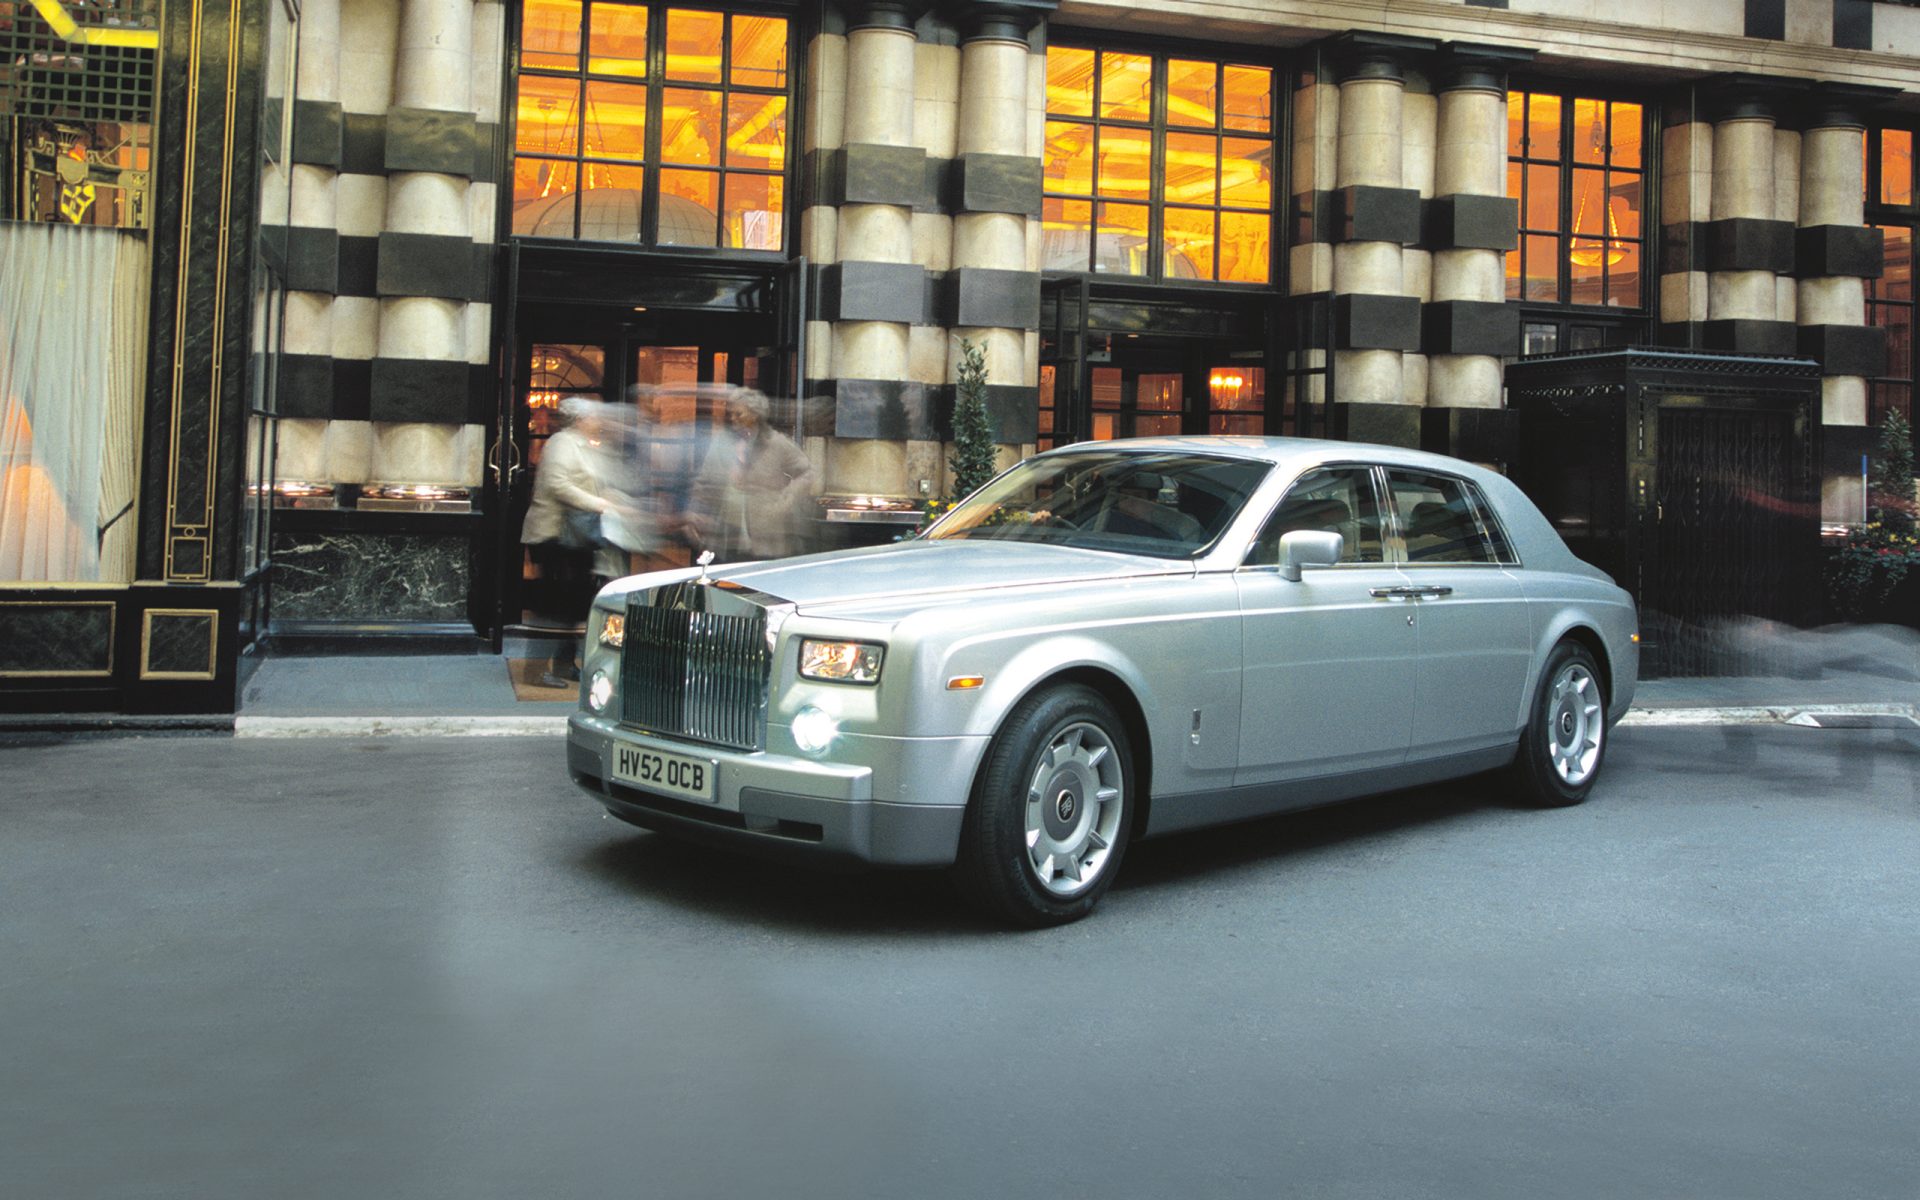 Rolls-Royce Motor Cars releases the new Phantom onto the market.